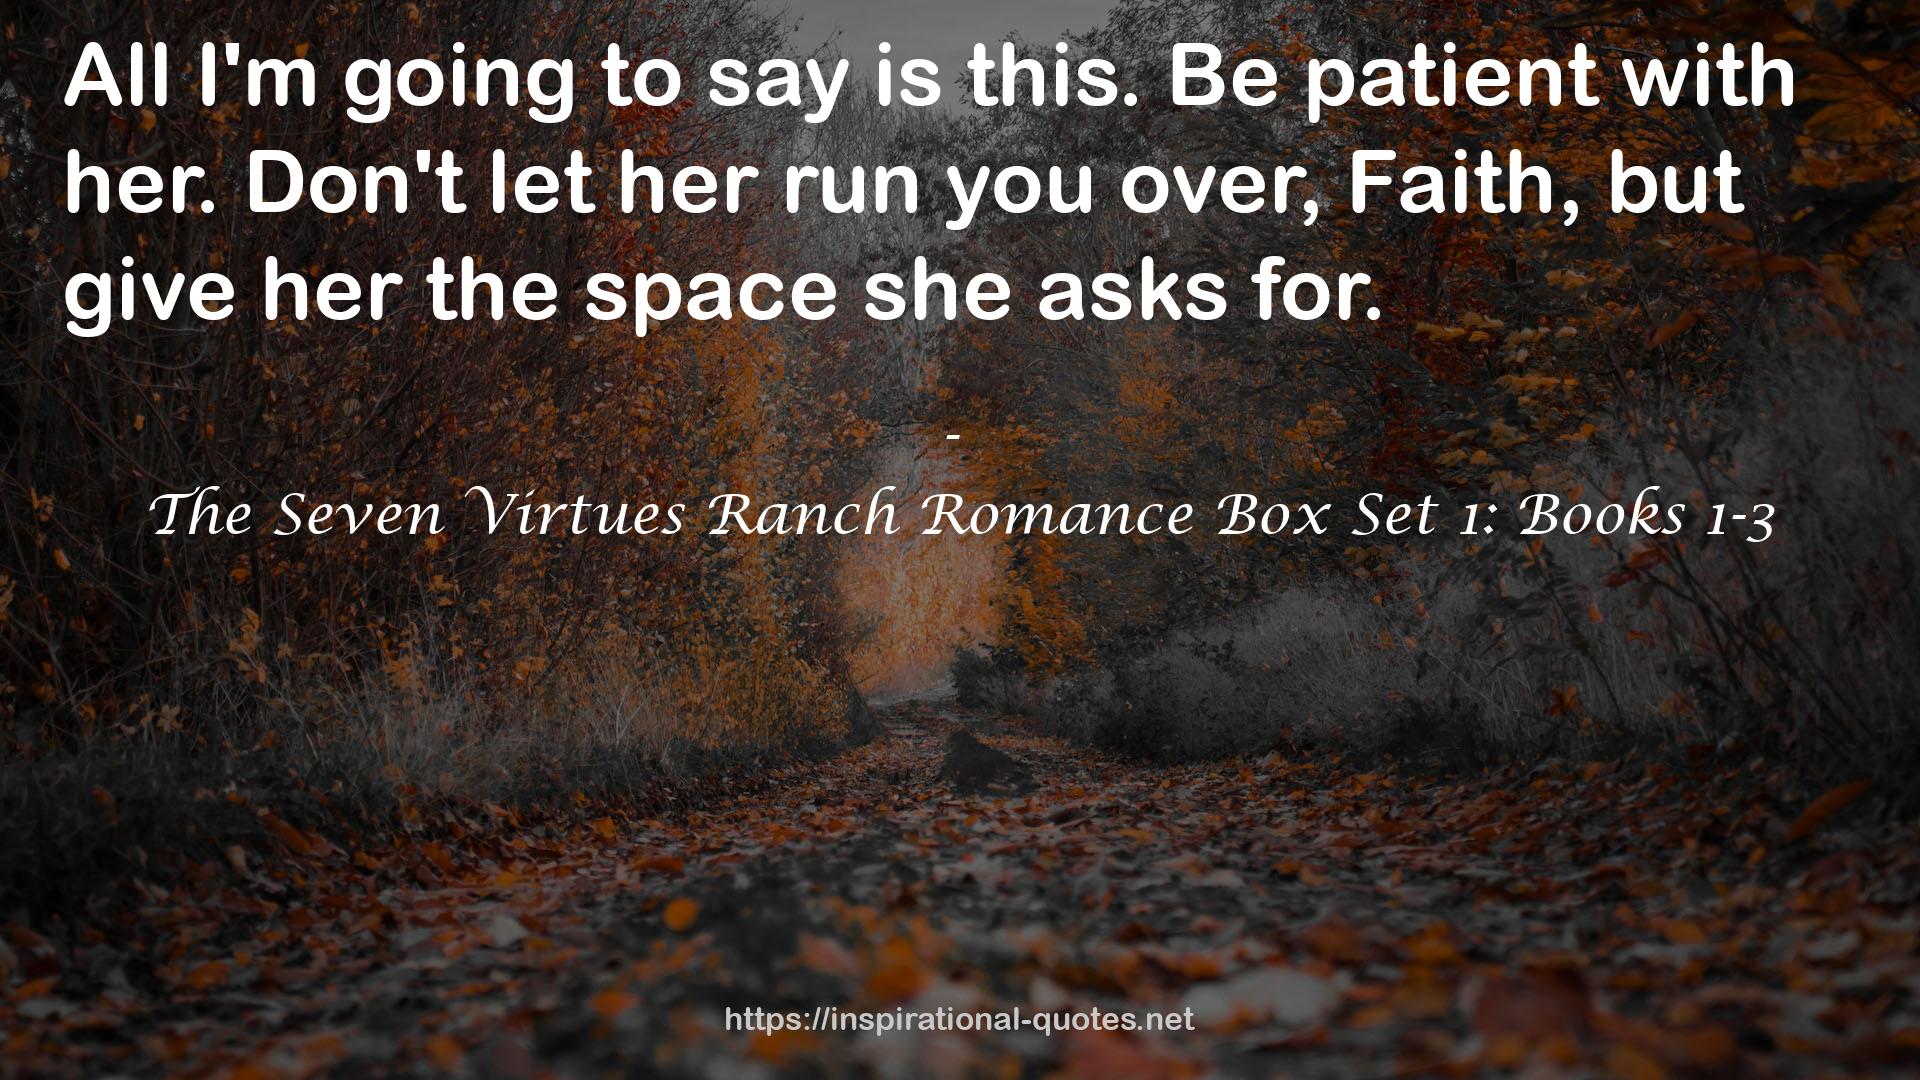 The Seven Virtues Ranch Romance Box Set 1: Books 1-3 QUOTES